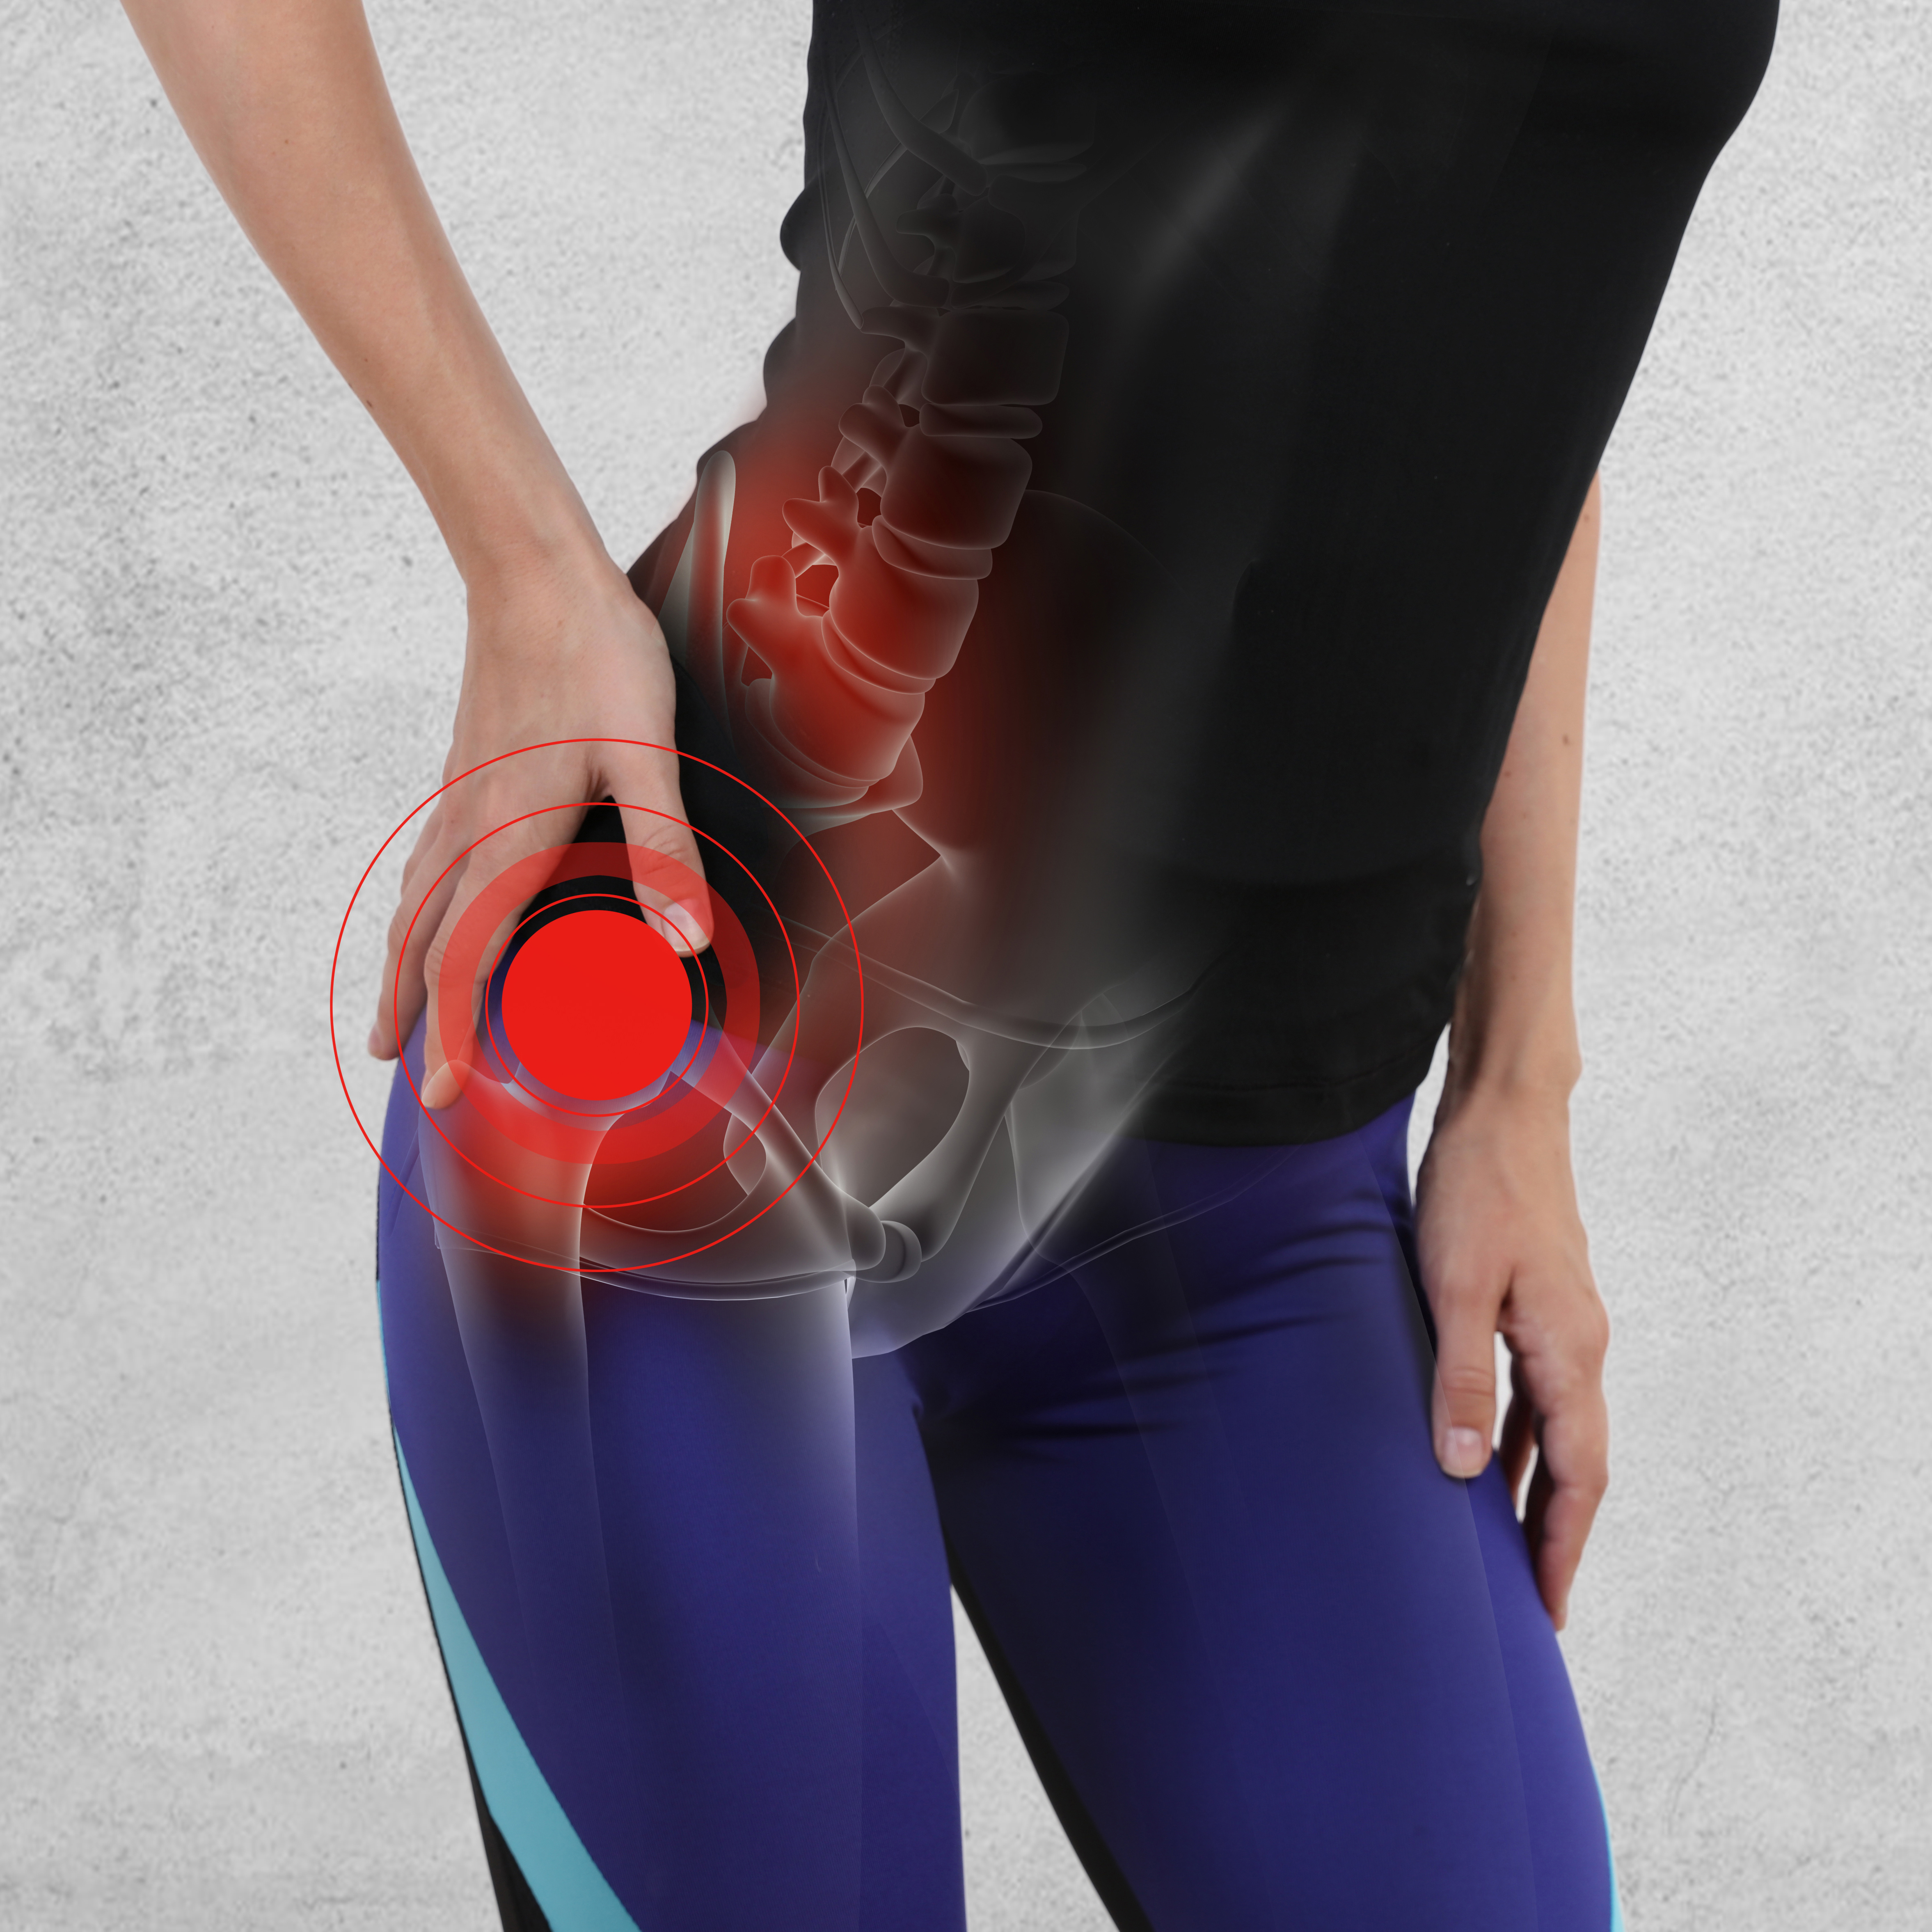 Snapping Hip Syndrome Orthopedics Sports Medicine